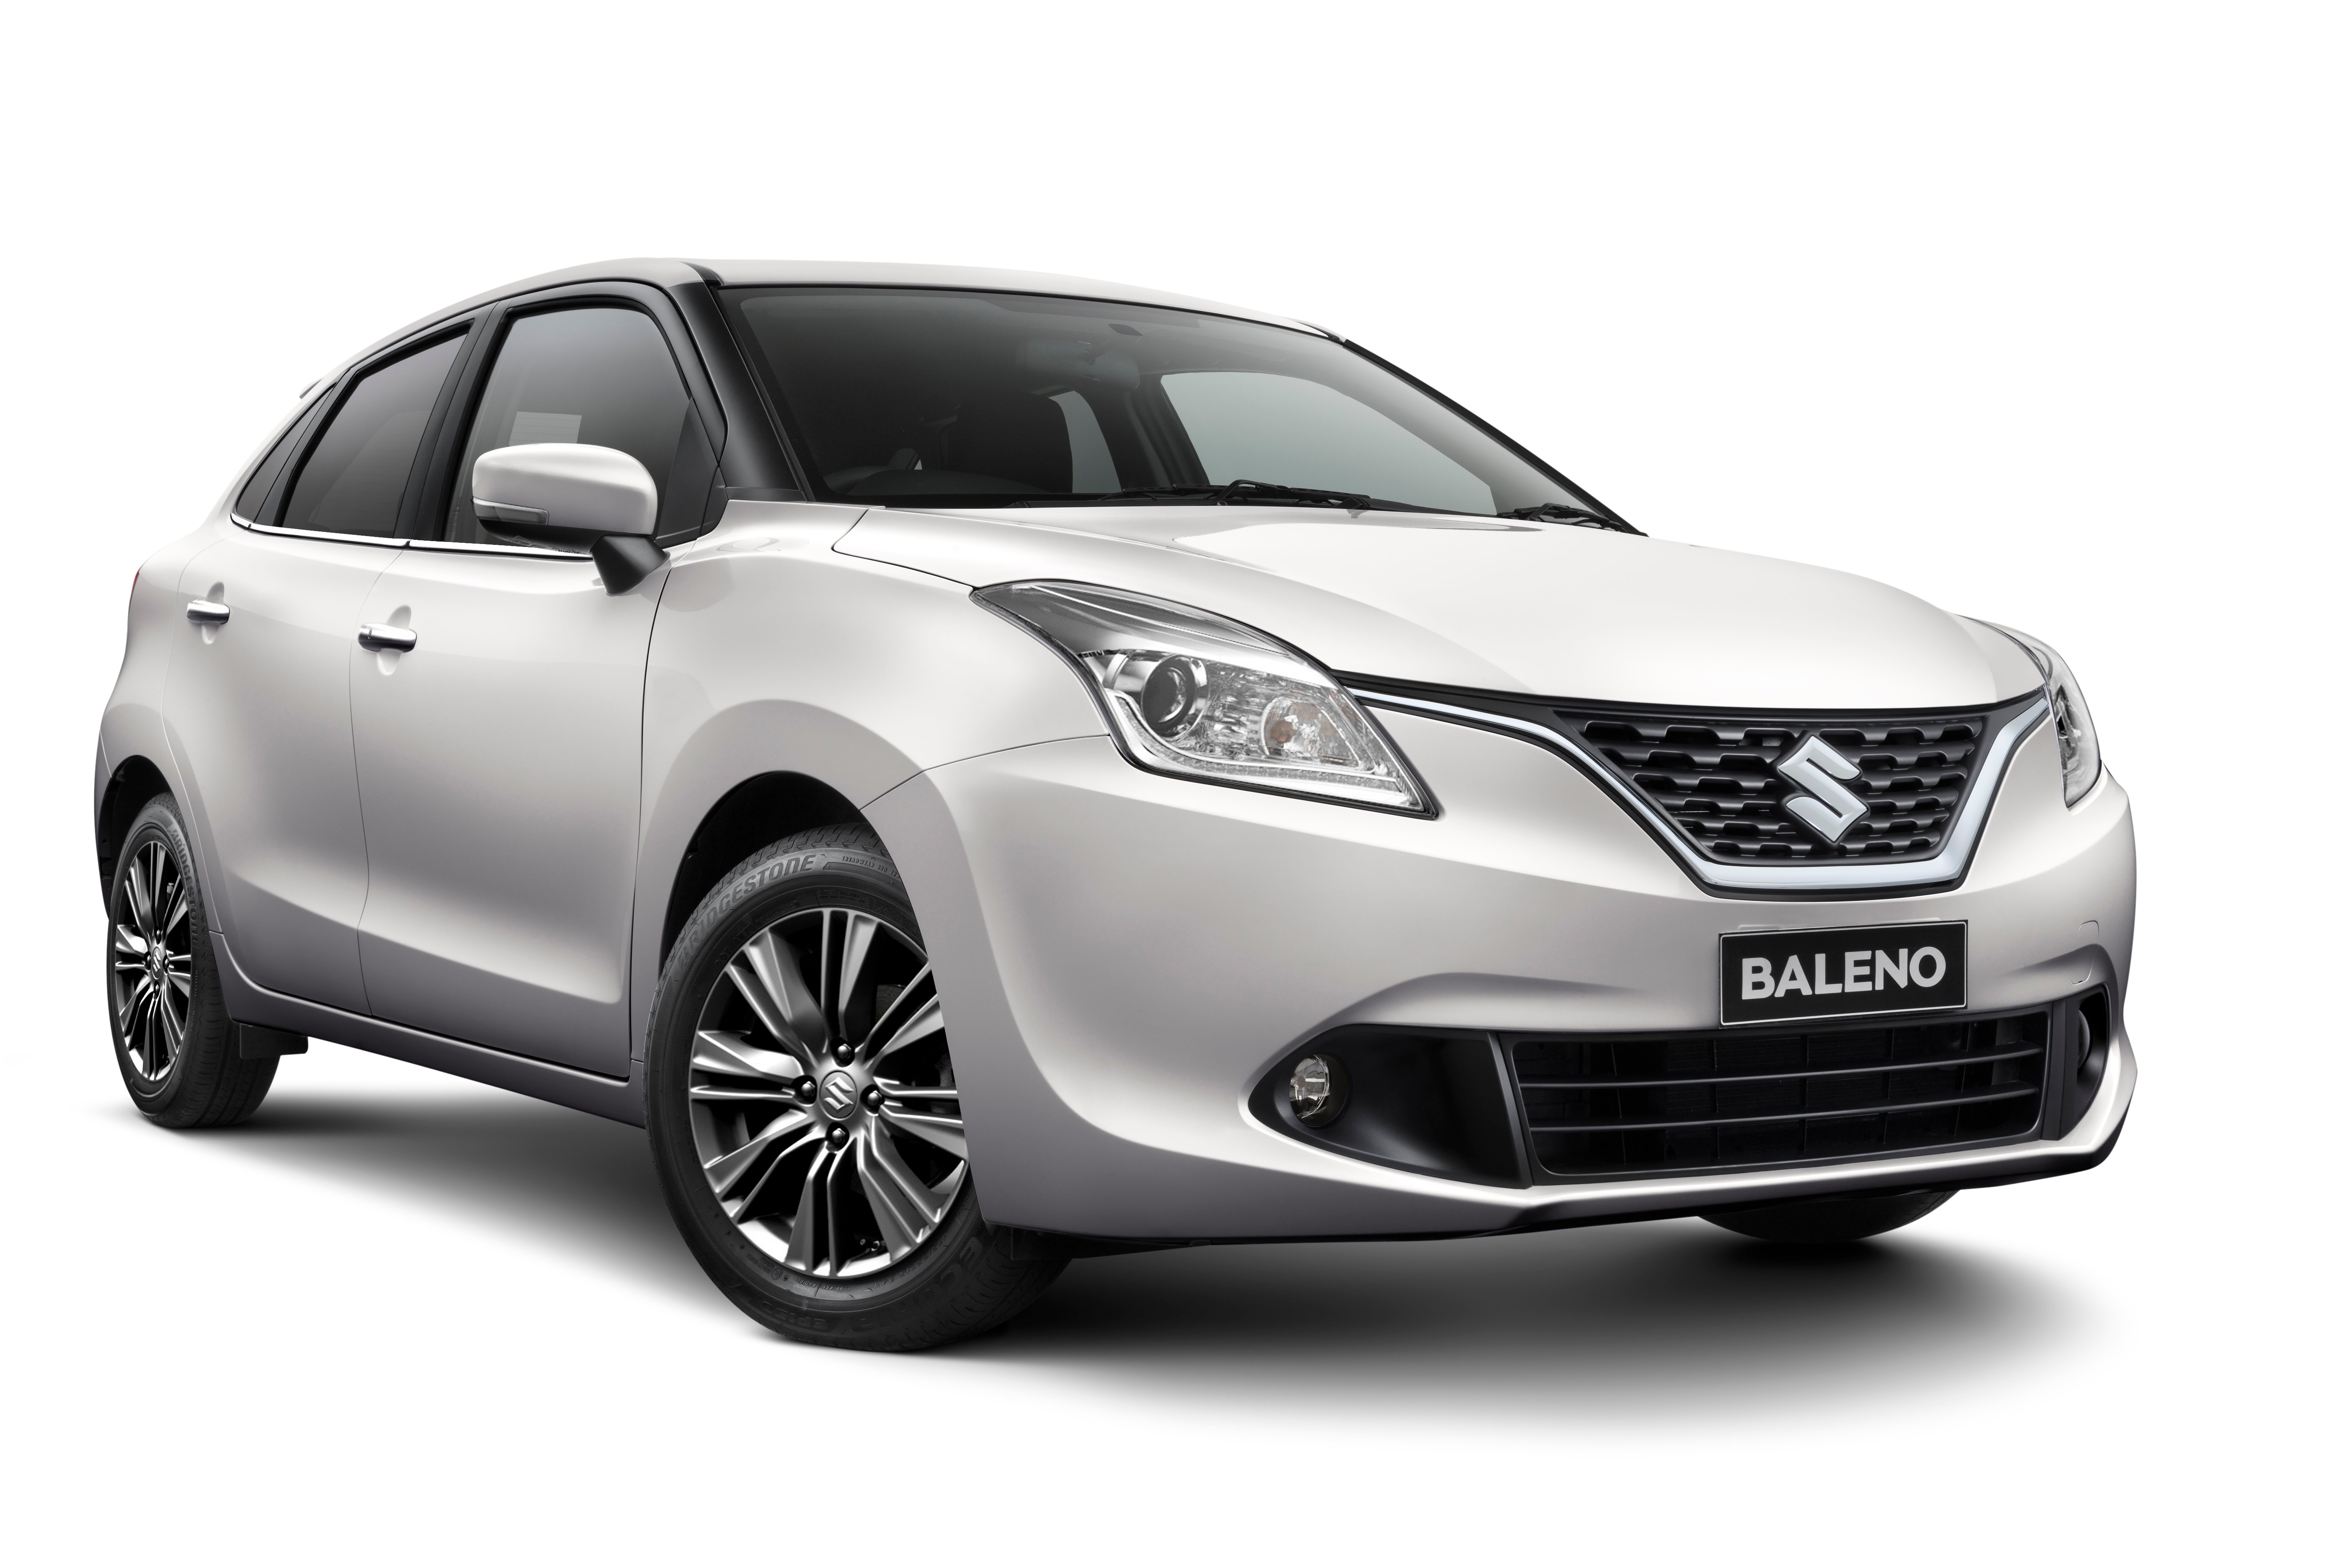 2016 Suzuki Baleno pricing and specifications photos